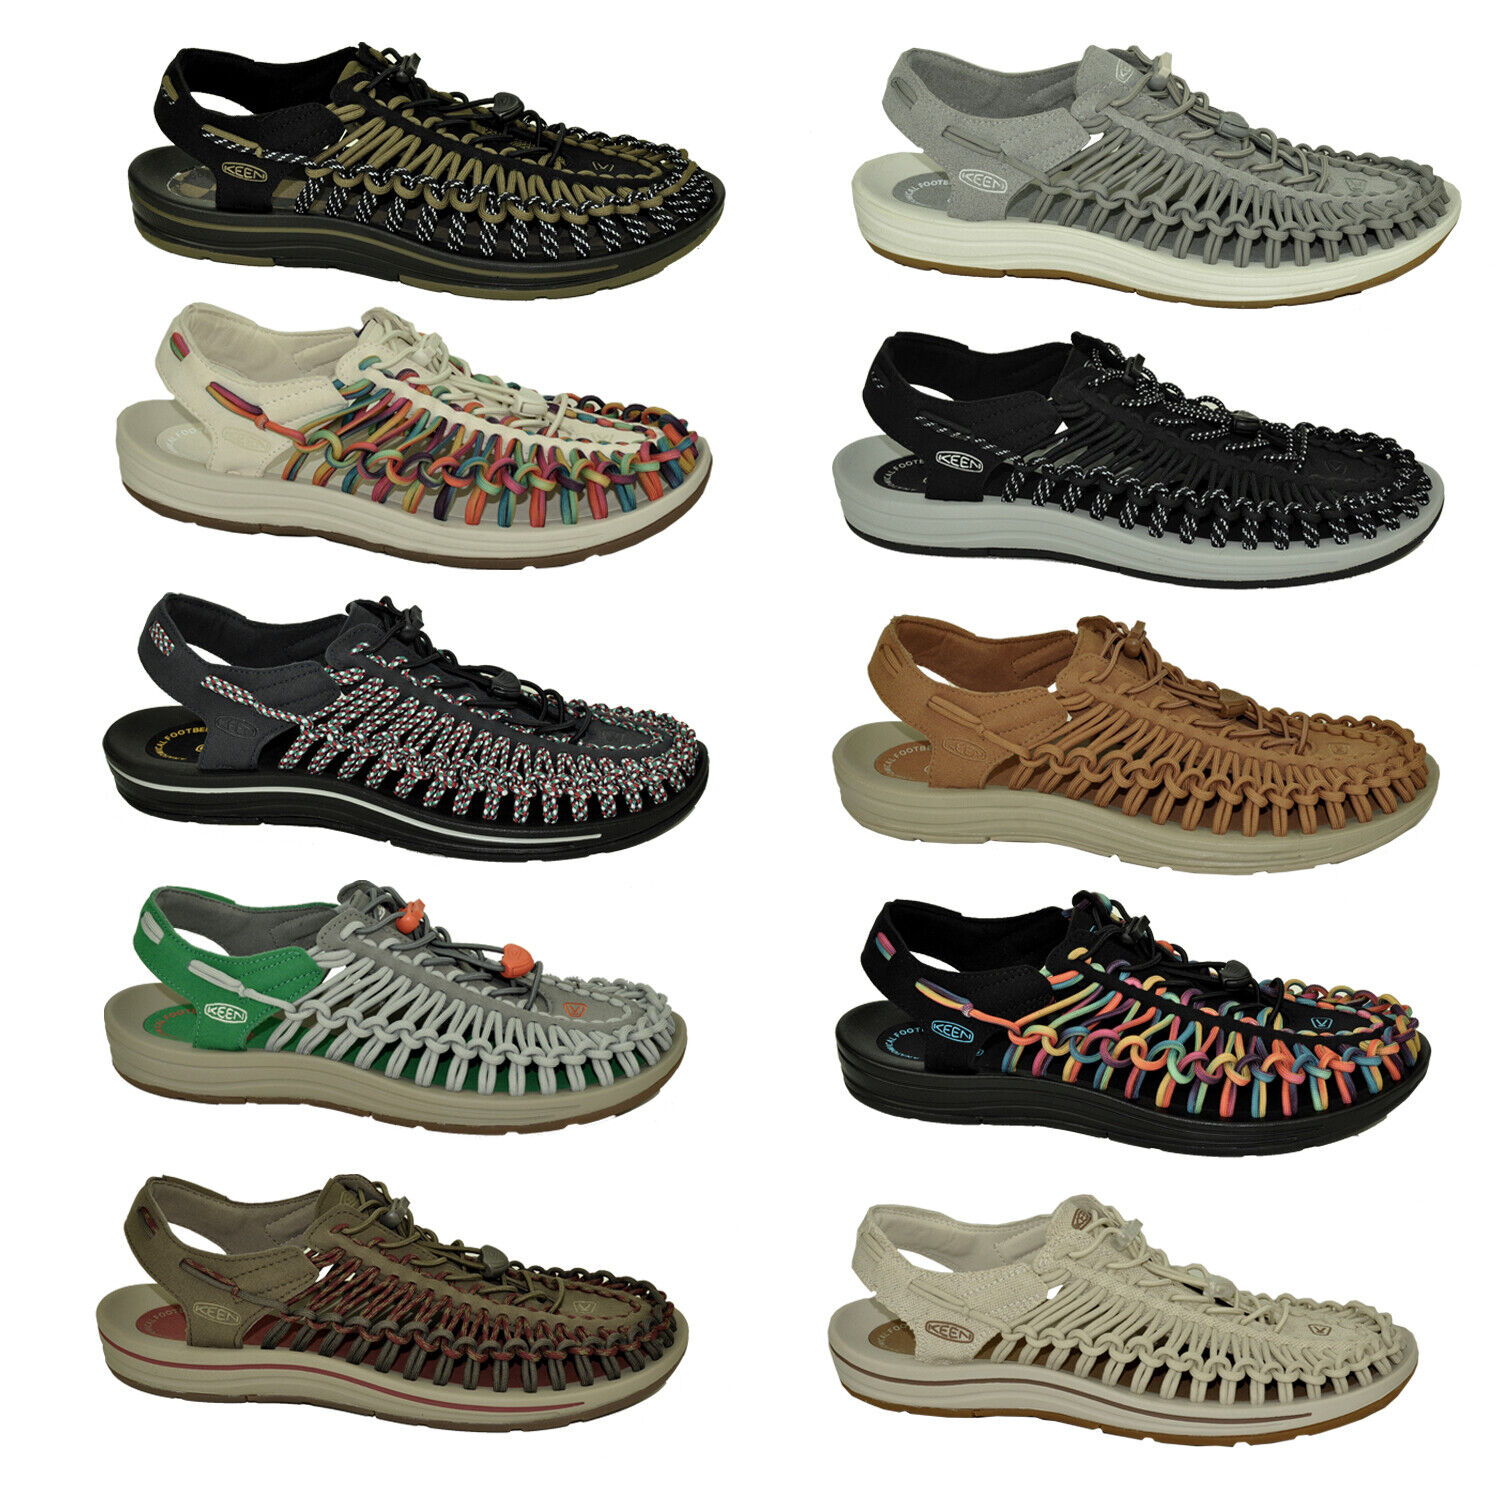 KEEN Uneek Sandalen Trekkingsandalen Ultra Leicht Leder Canvas Herren Sneaker Modell - Farbe 1026340 - Olive Schuhgröße EUR 47,5 - UK 13 - US 14